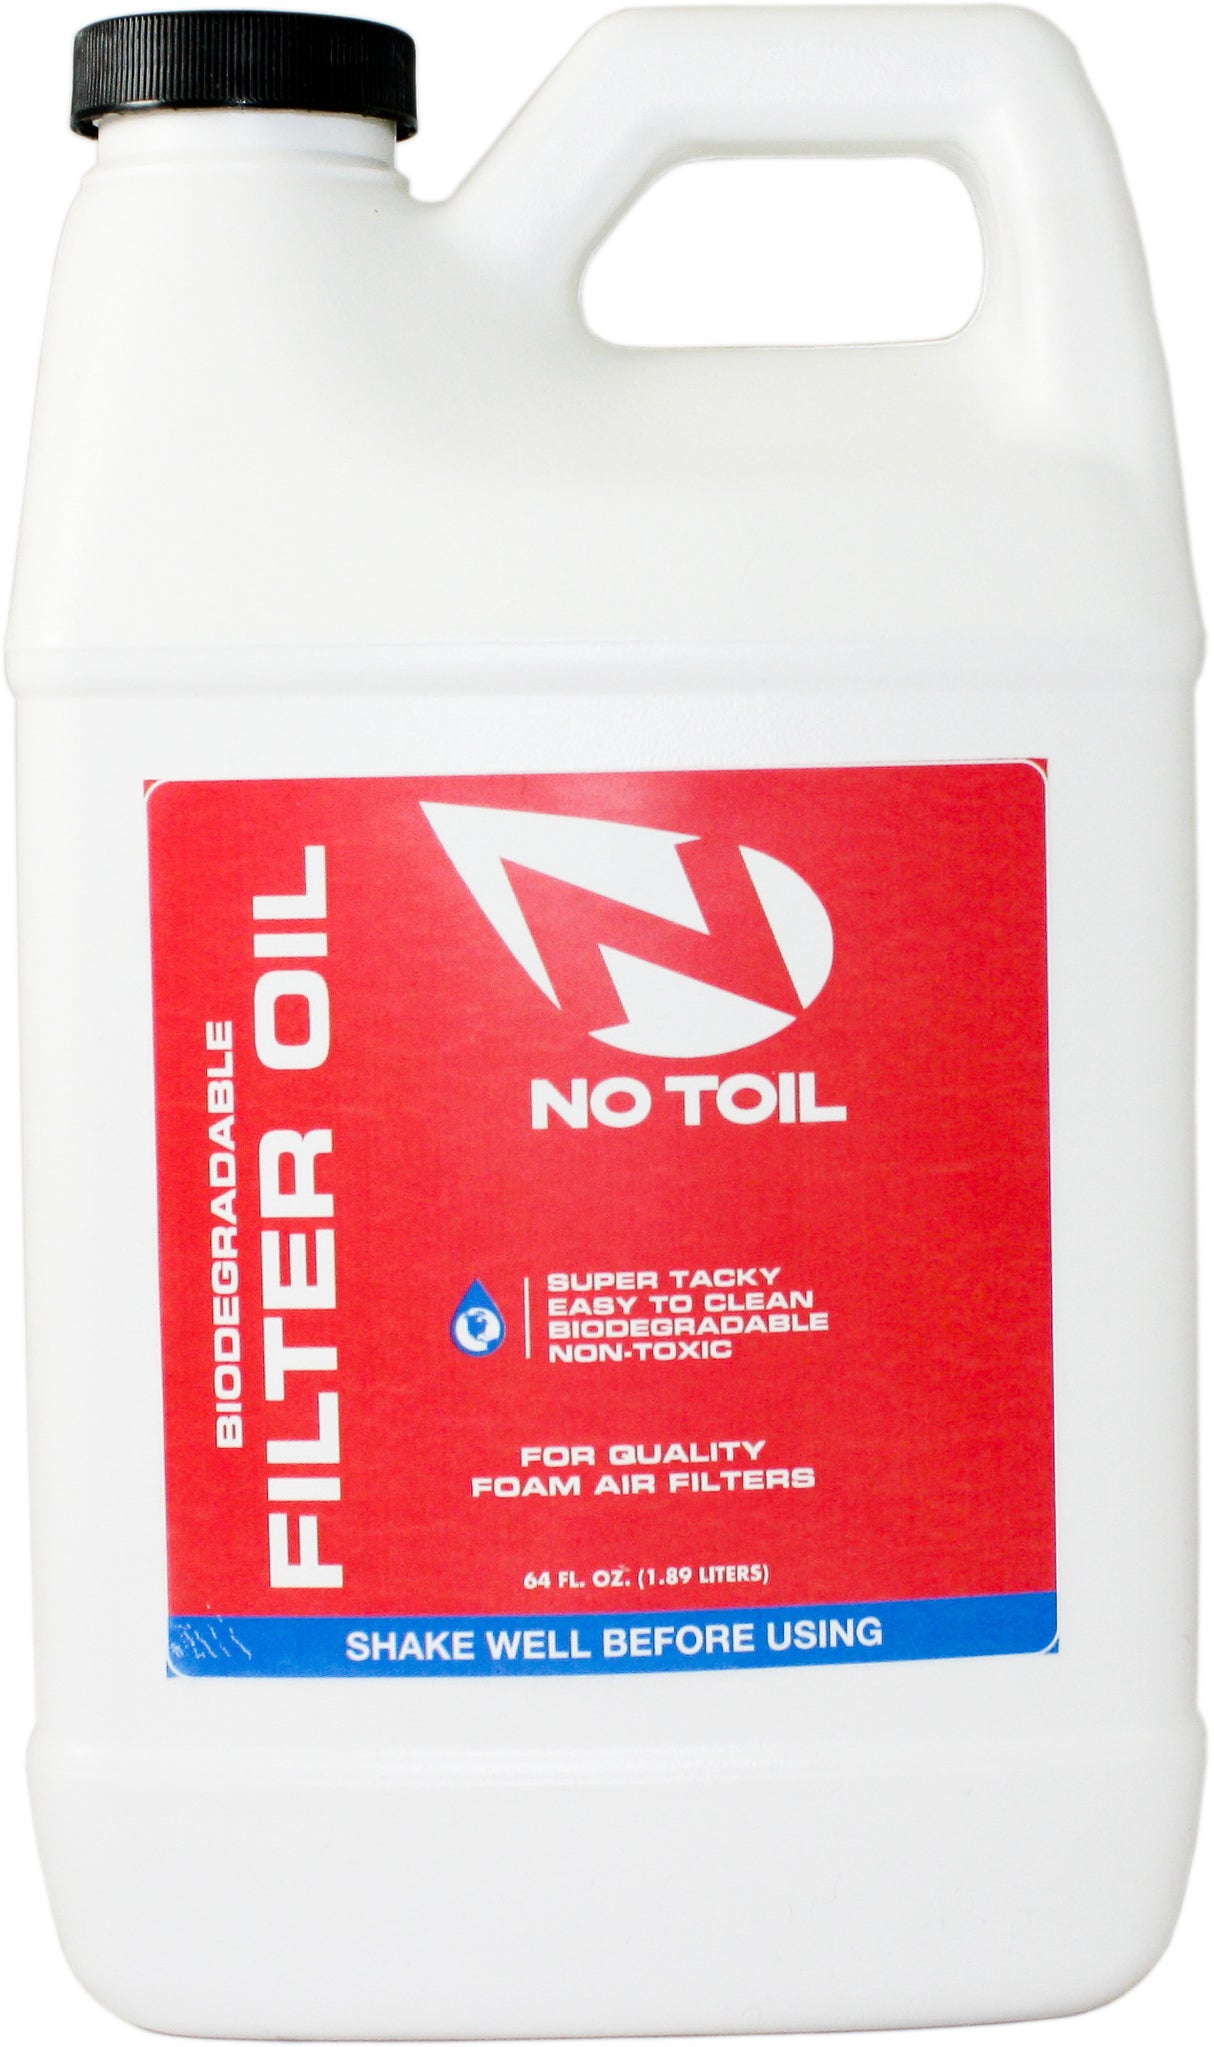 NoToil Air Filter oil 1/2 gal